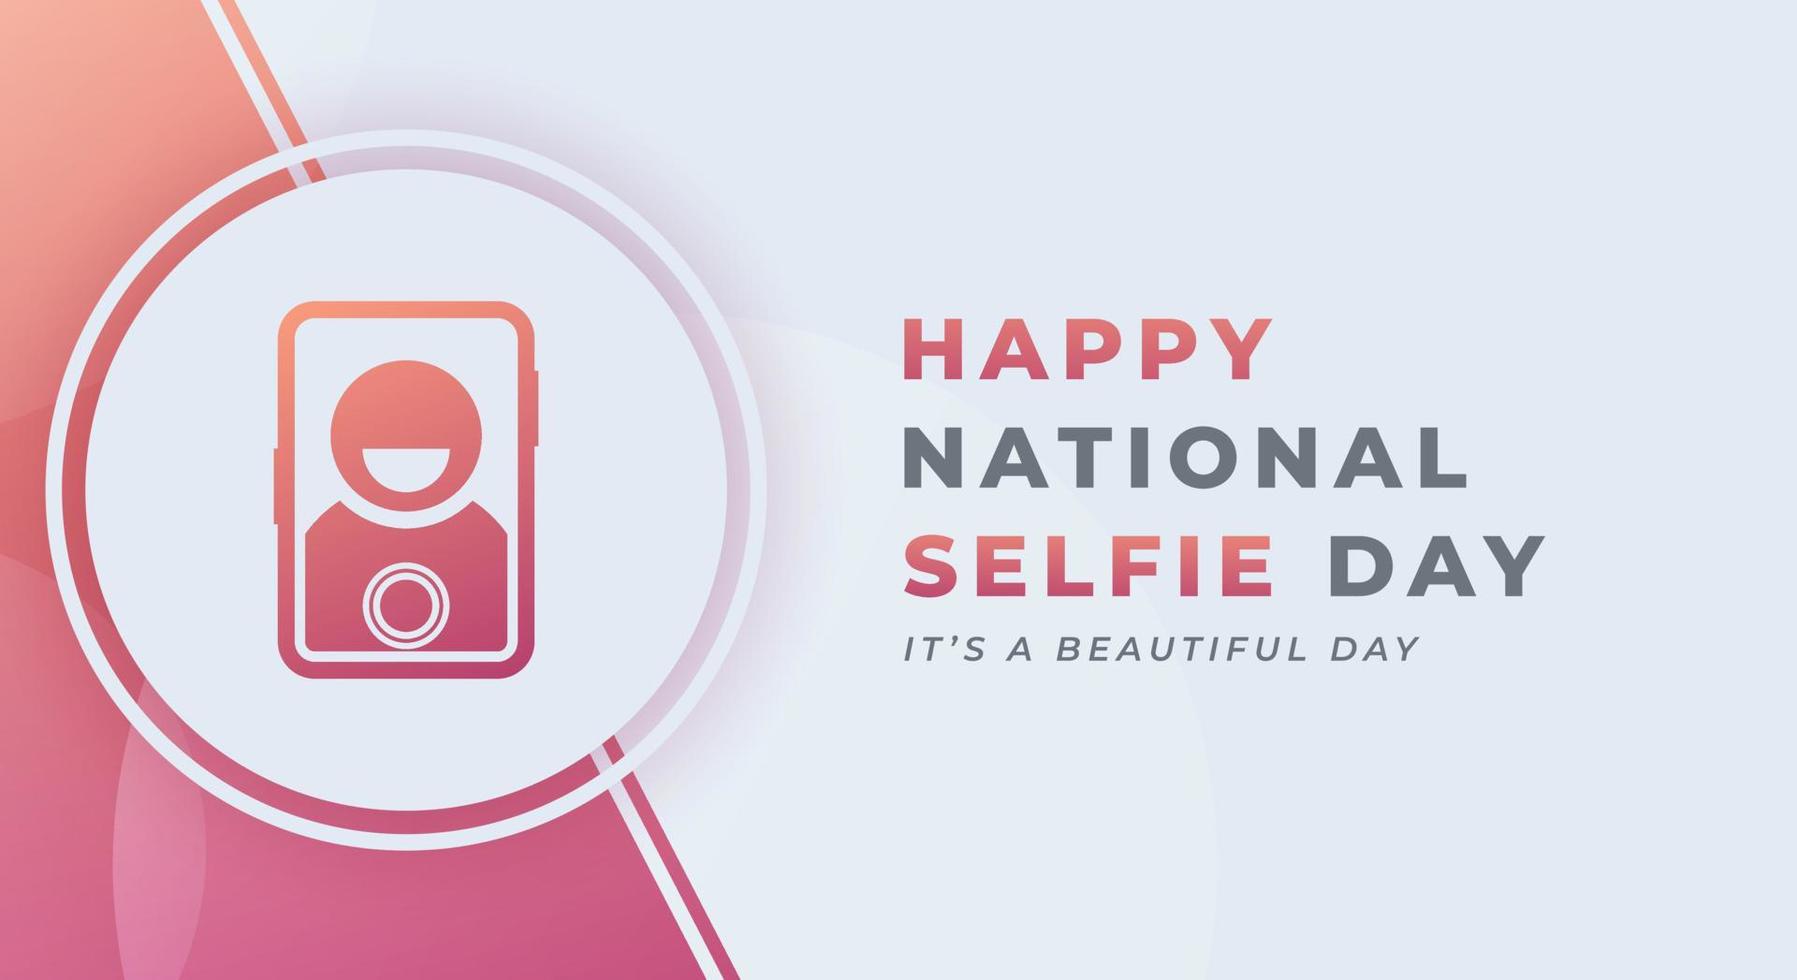 Happy National Selfie Day June Celebration Vector Design Illustration. Template for Background, Poster, Banner, Advertising, Greeting Card or Print Design Element